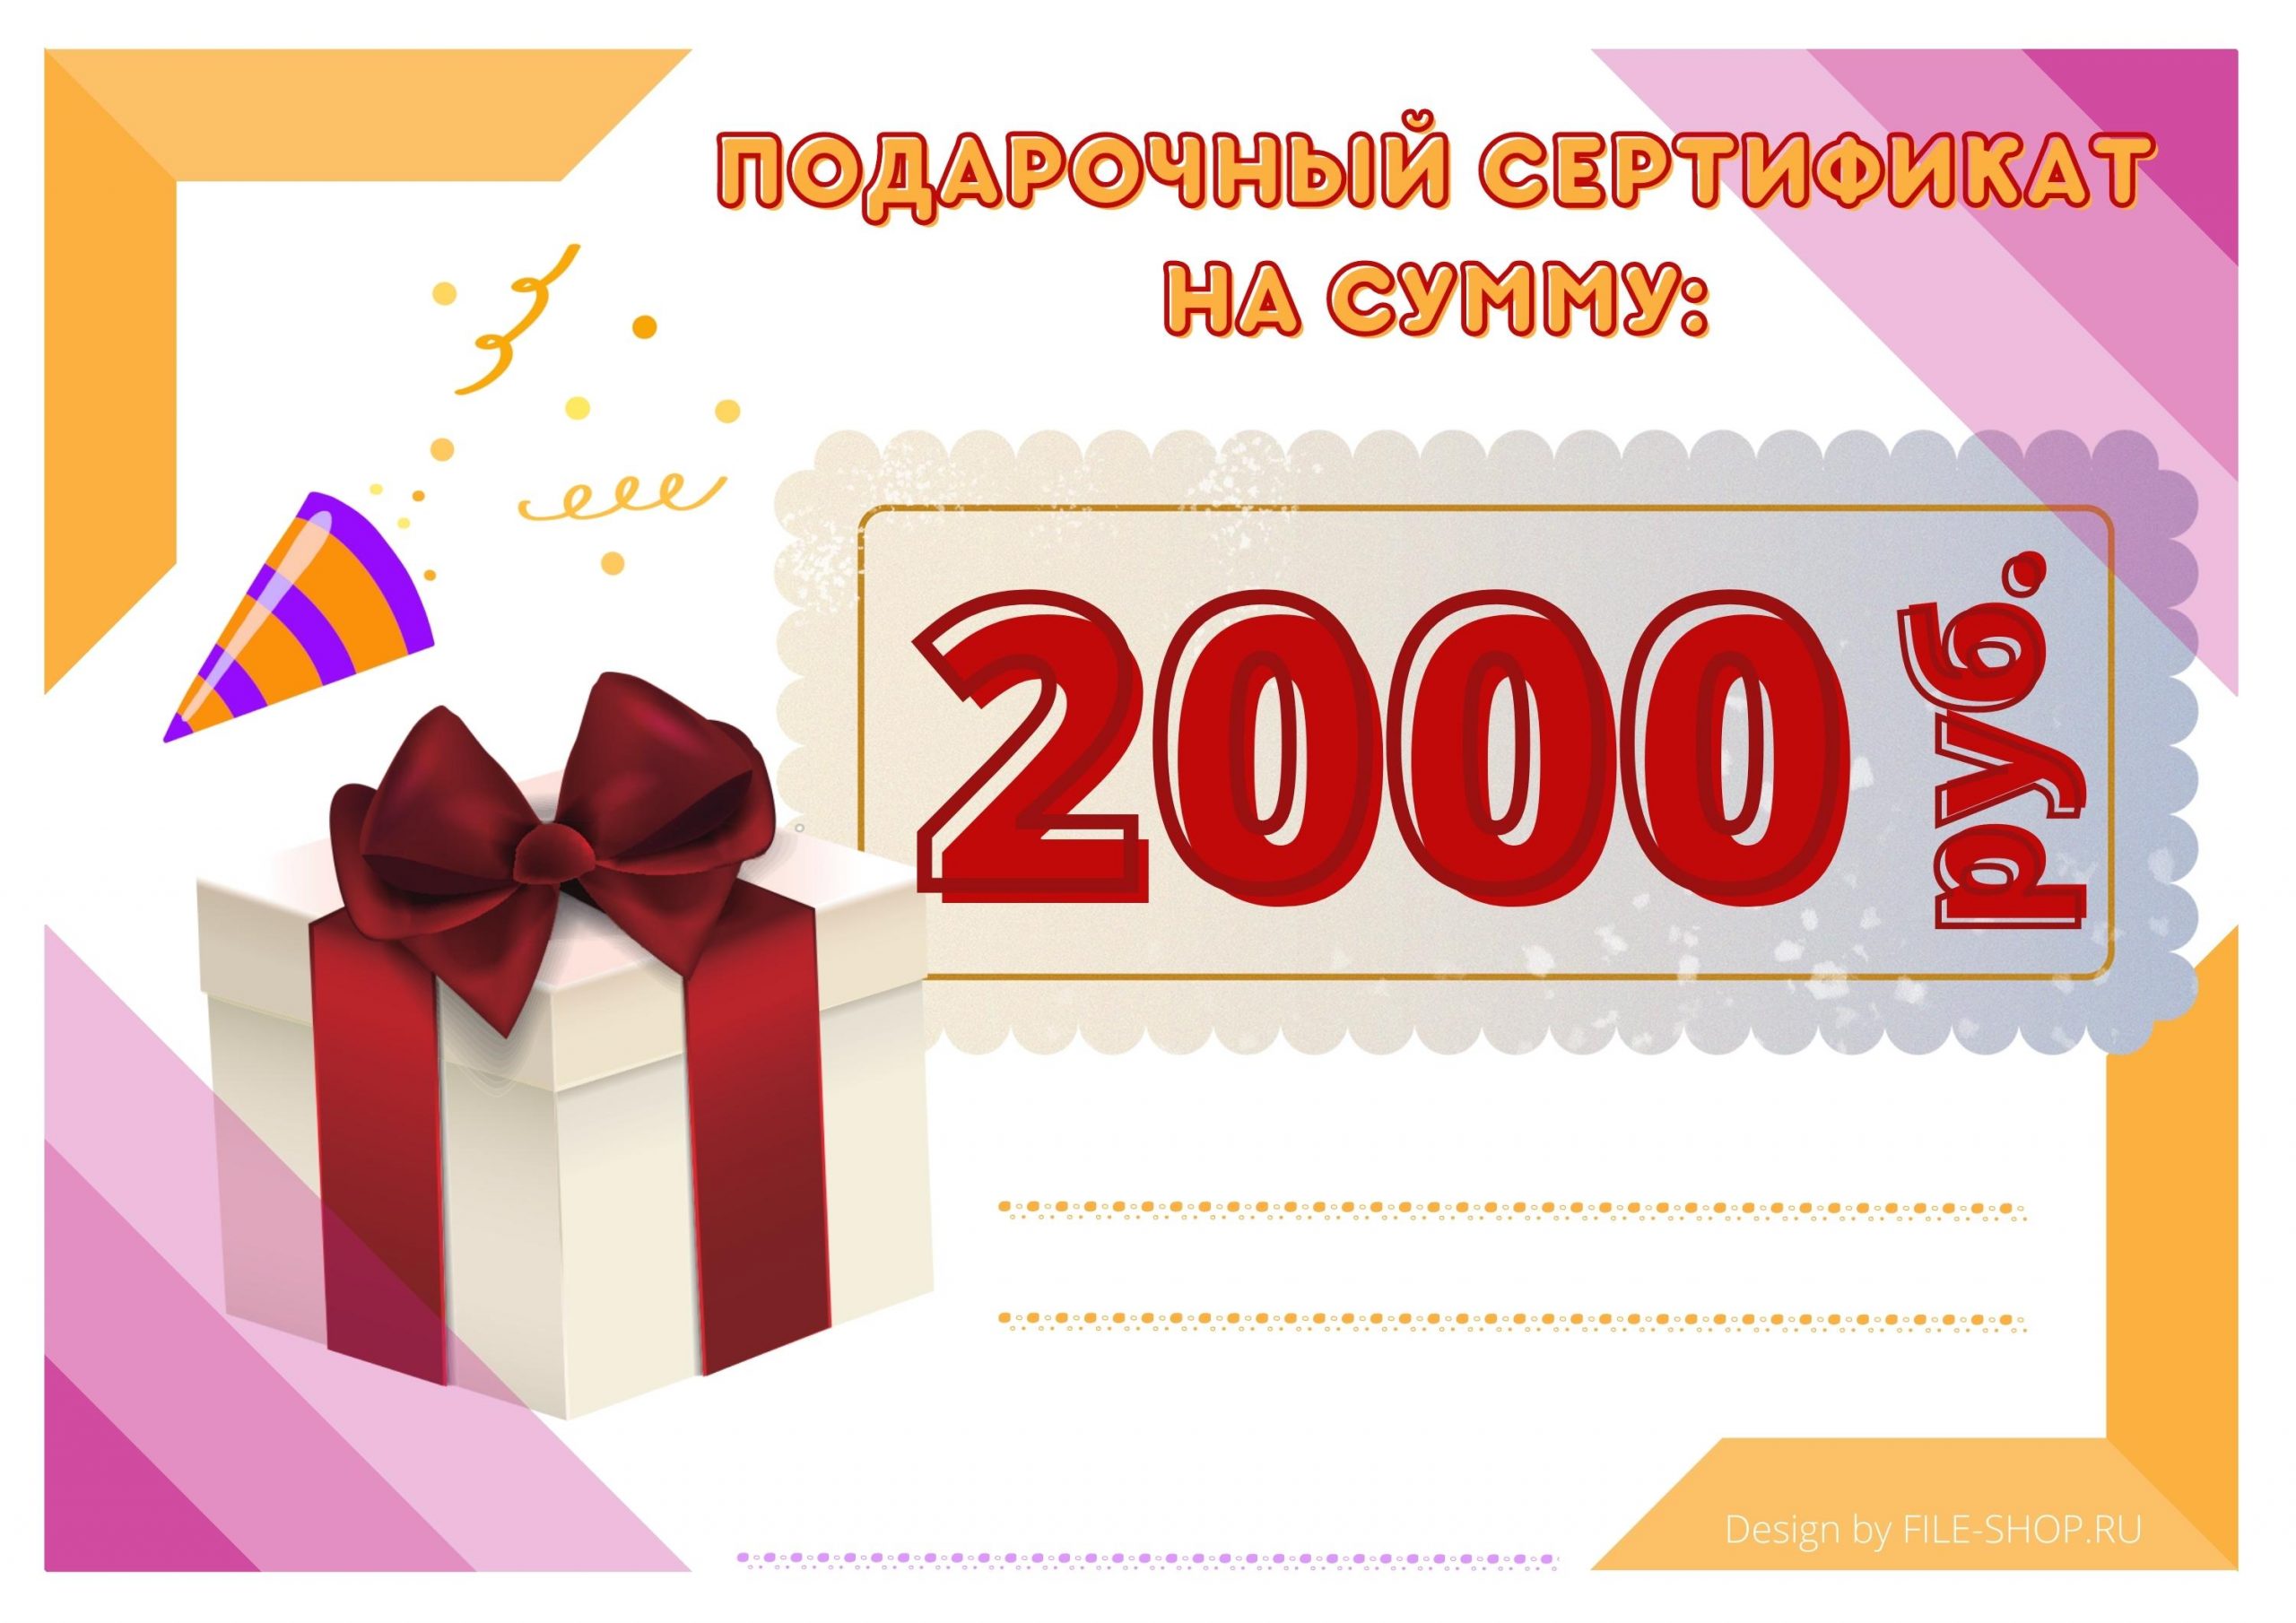 Заказ от 3000 рублей